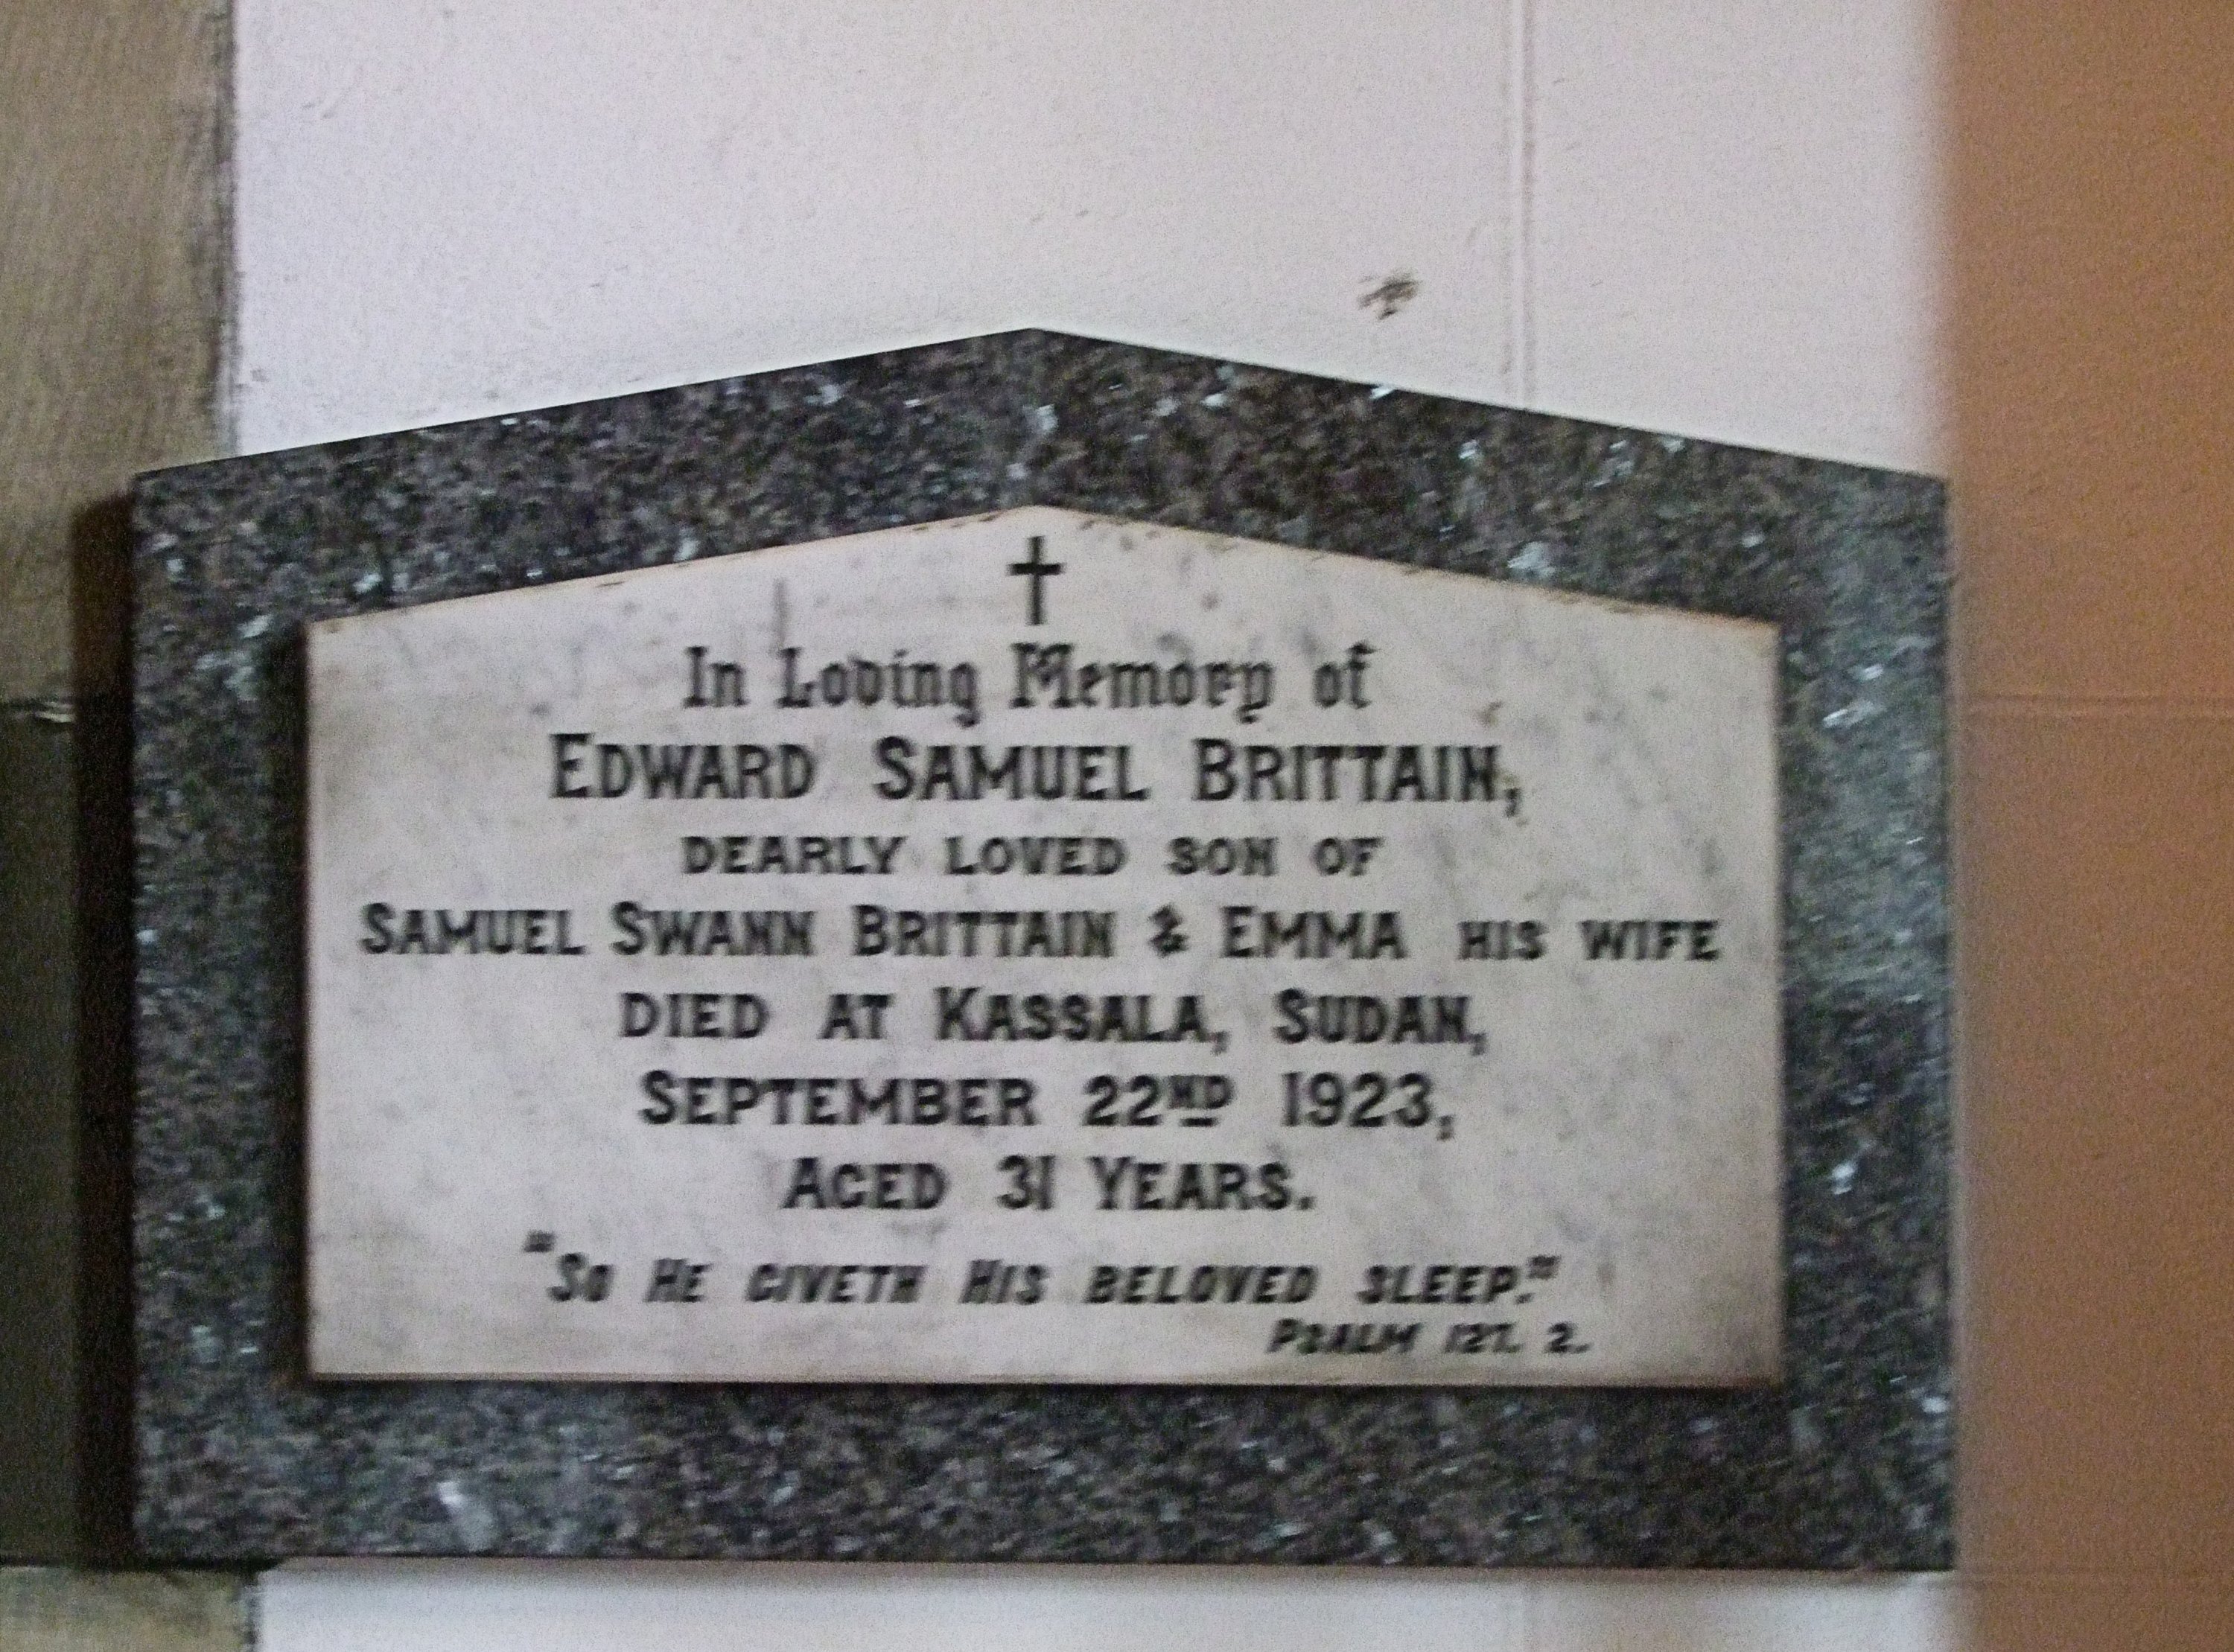 Edward Samuel BRITTAIN